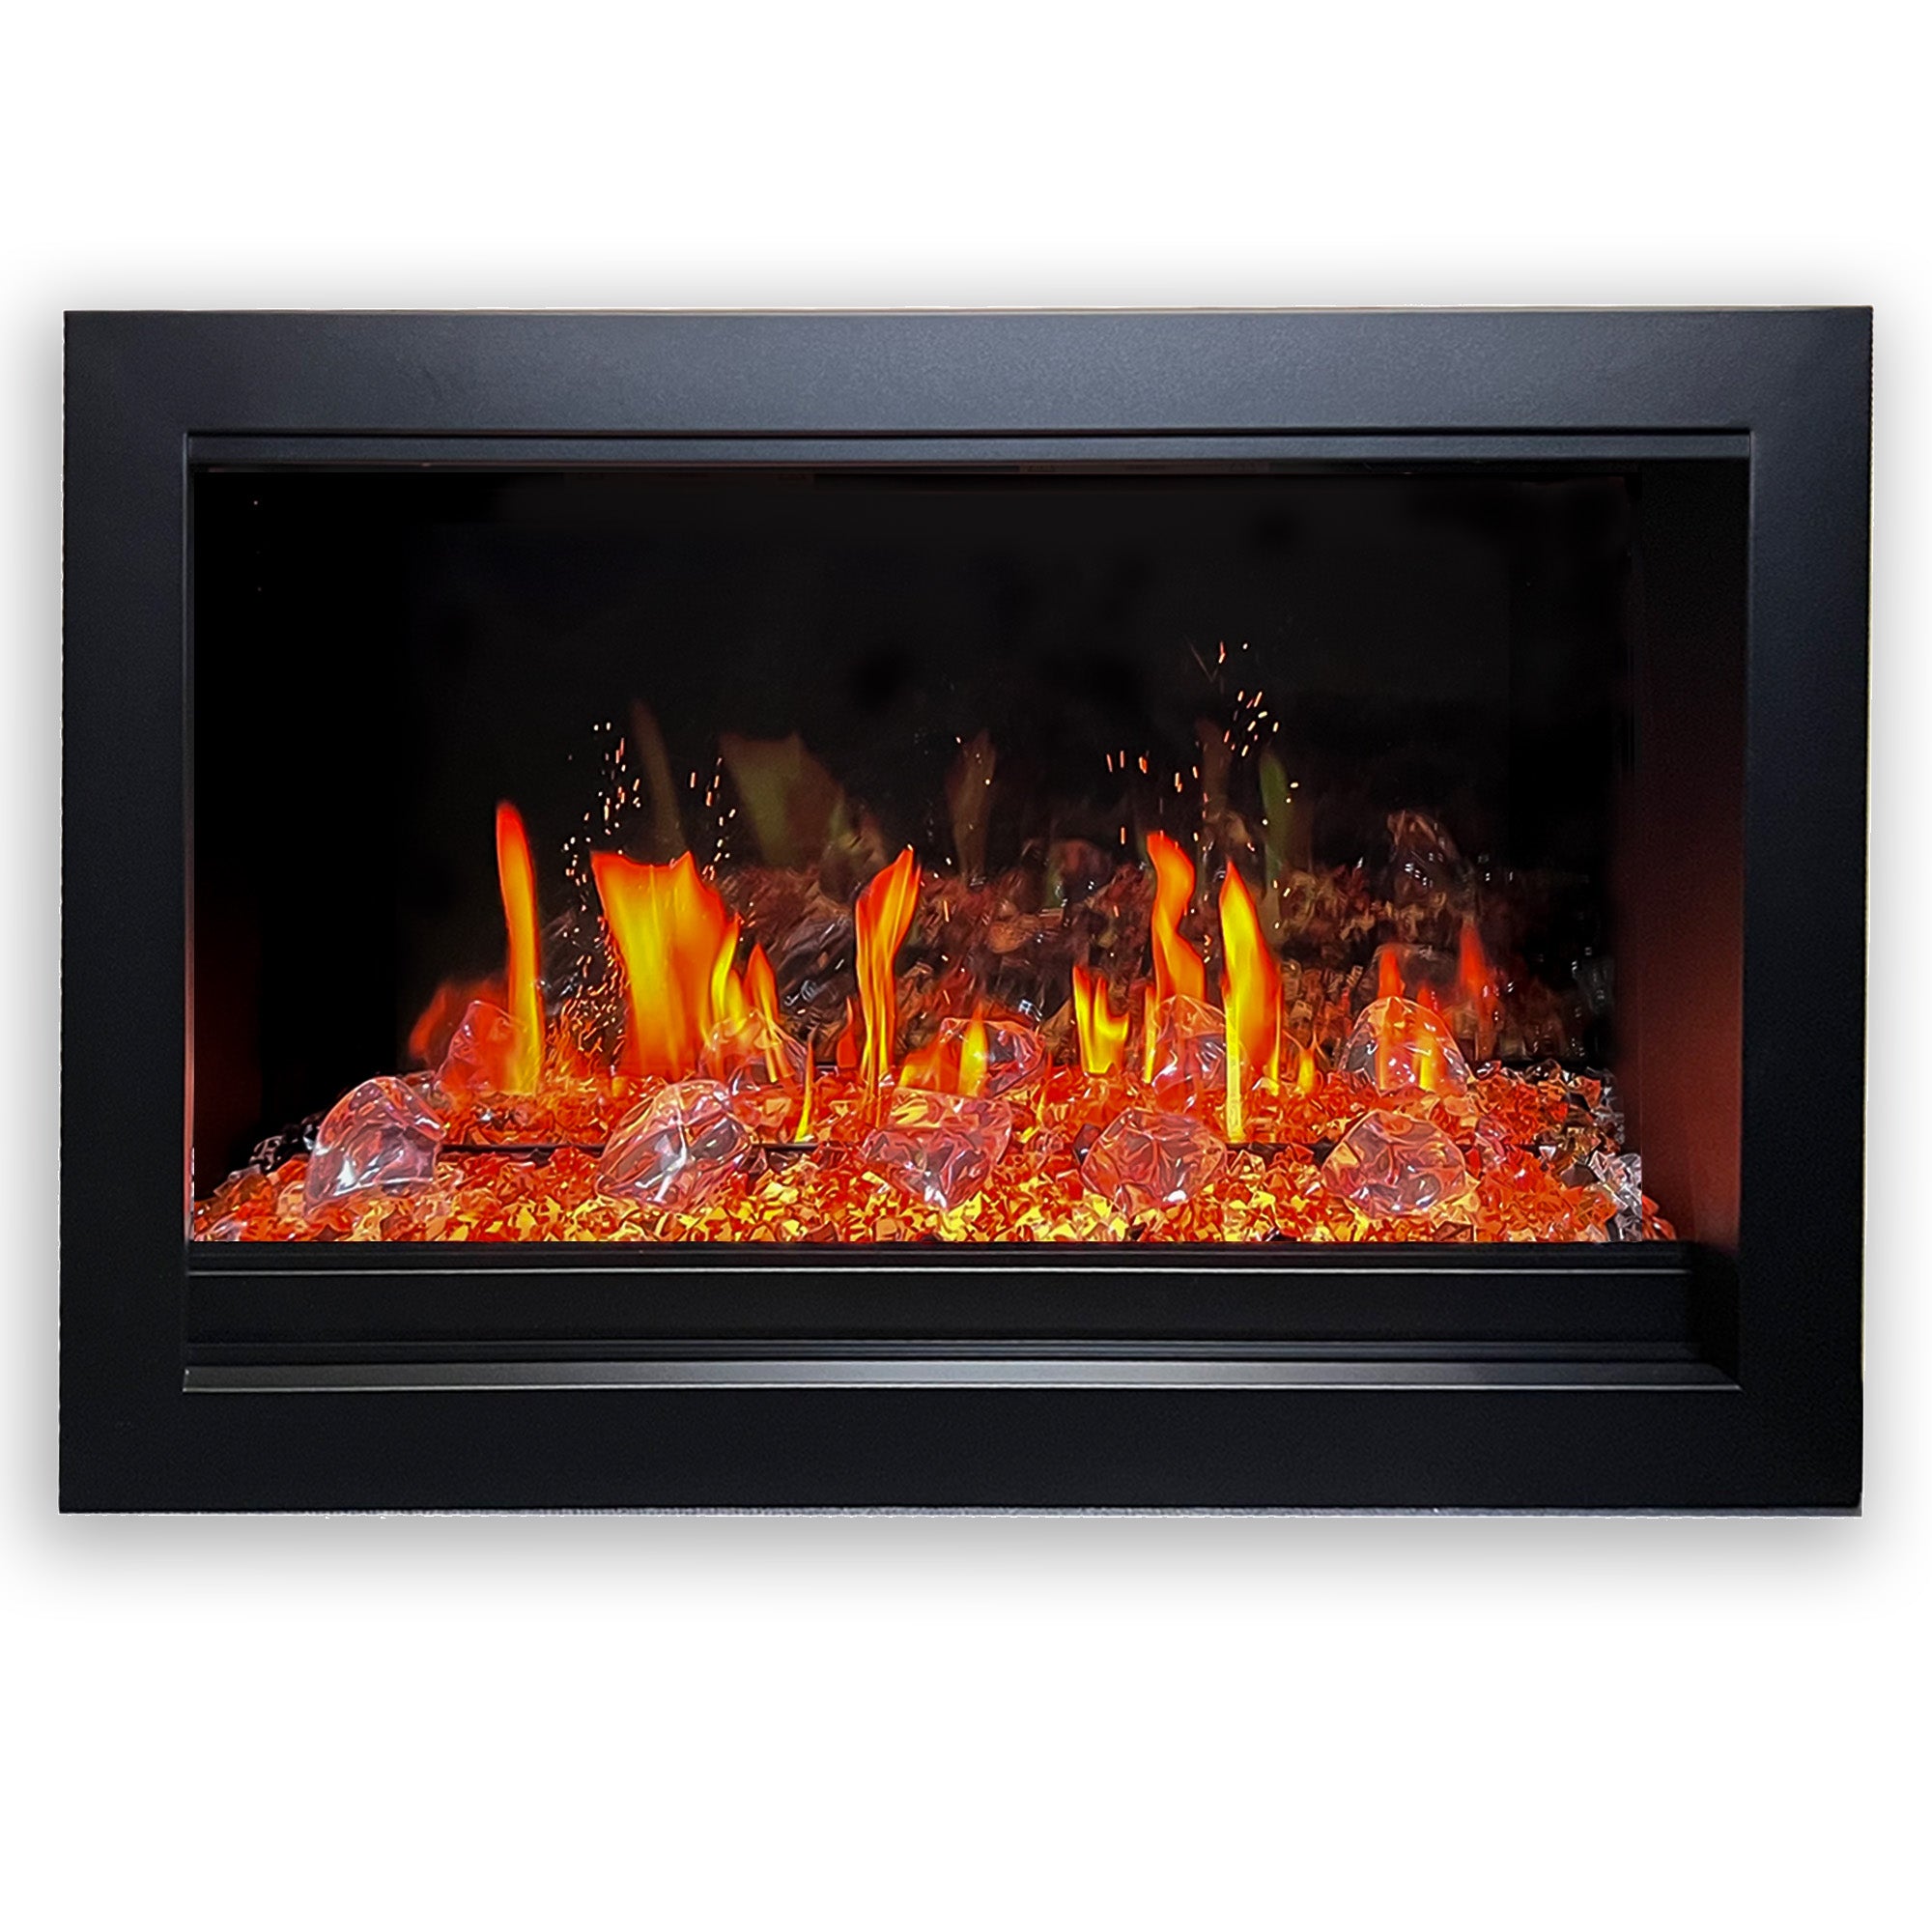 Litedeer LiteStar 33 inchS mart Electric Fireplace Inserts_Crystal Pebble_-ZEF38VC-33-C-River Rocks